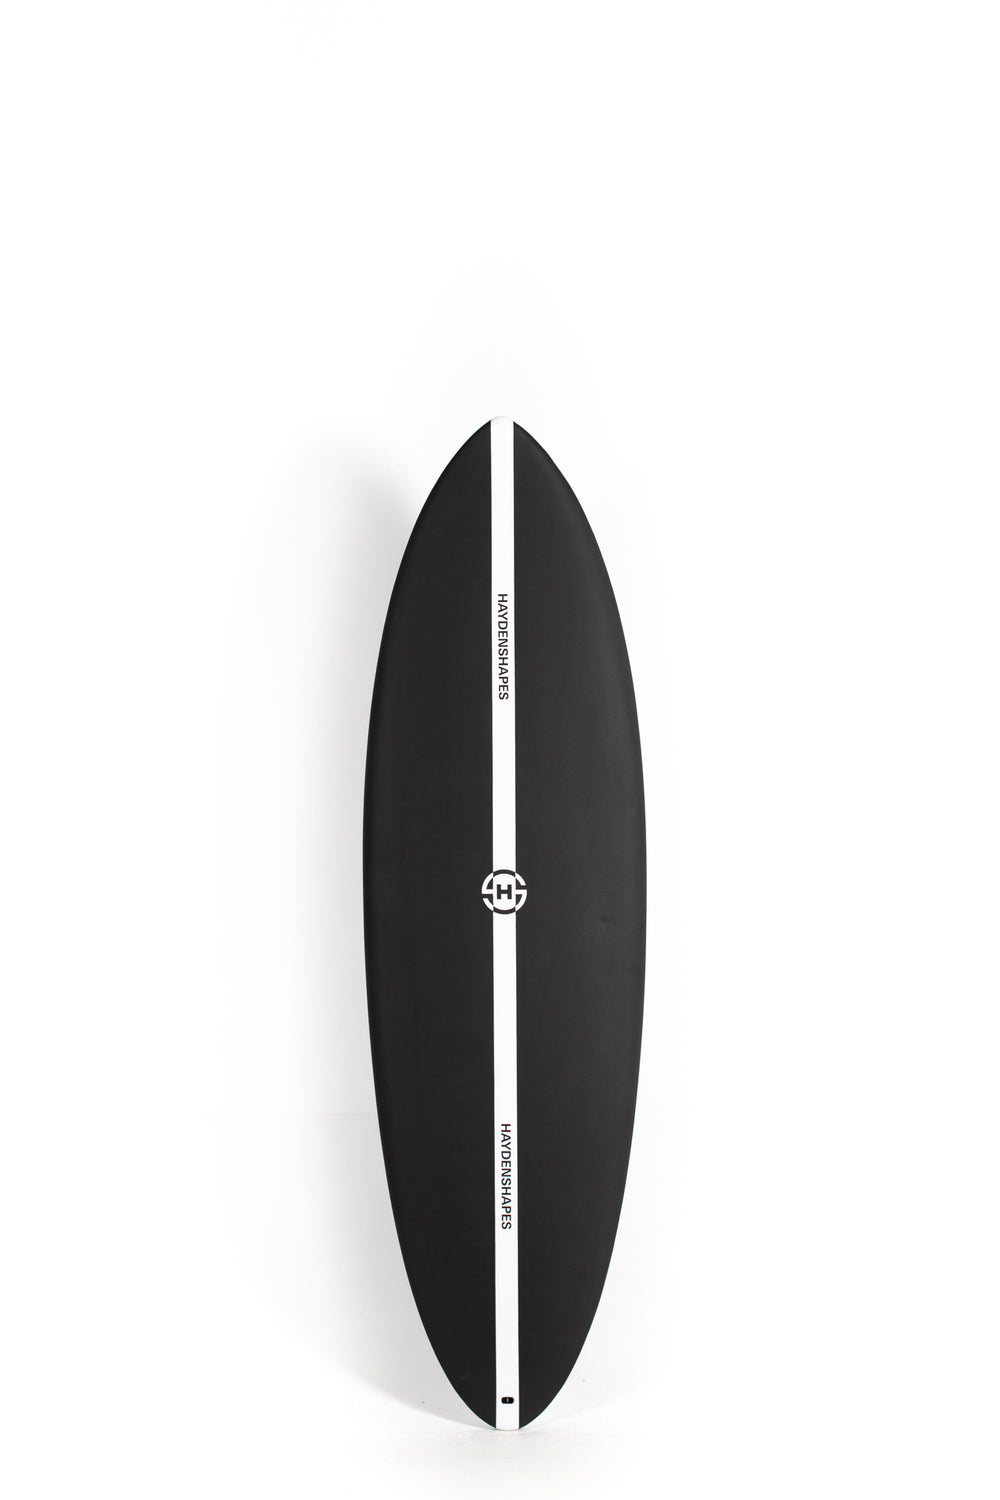 HaydenShapes Surfboard - HYPTO KRYPTO SOFT - 6'8